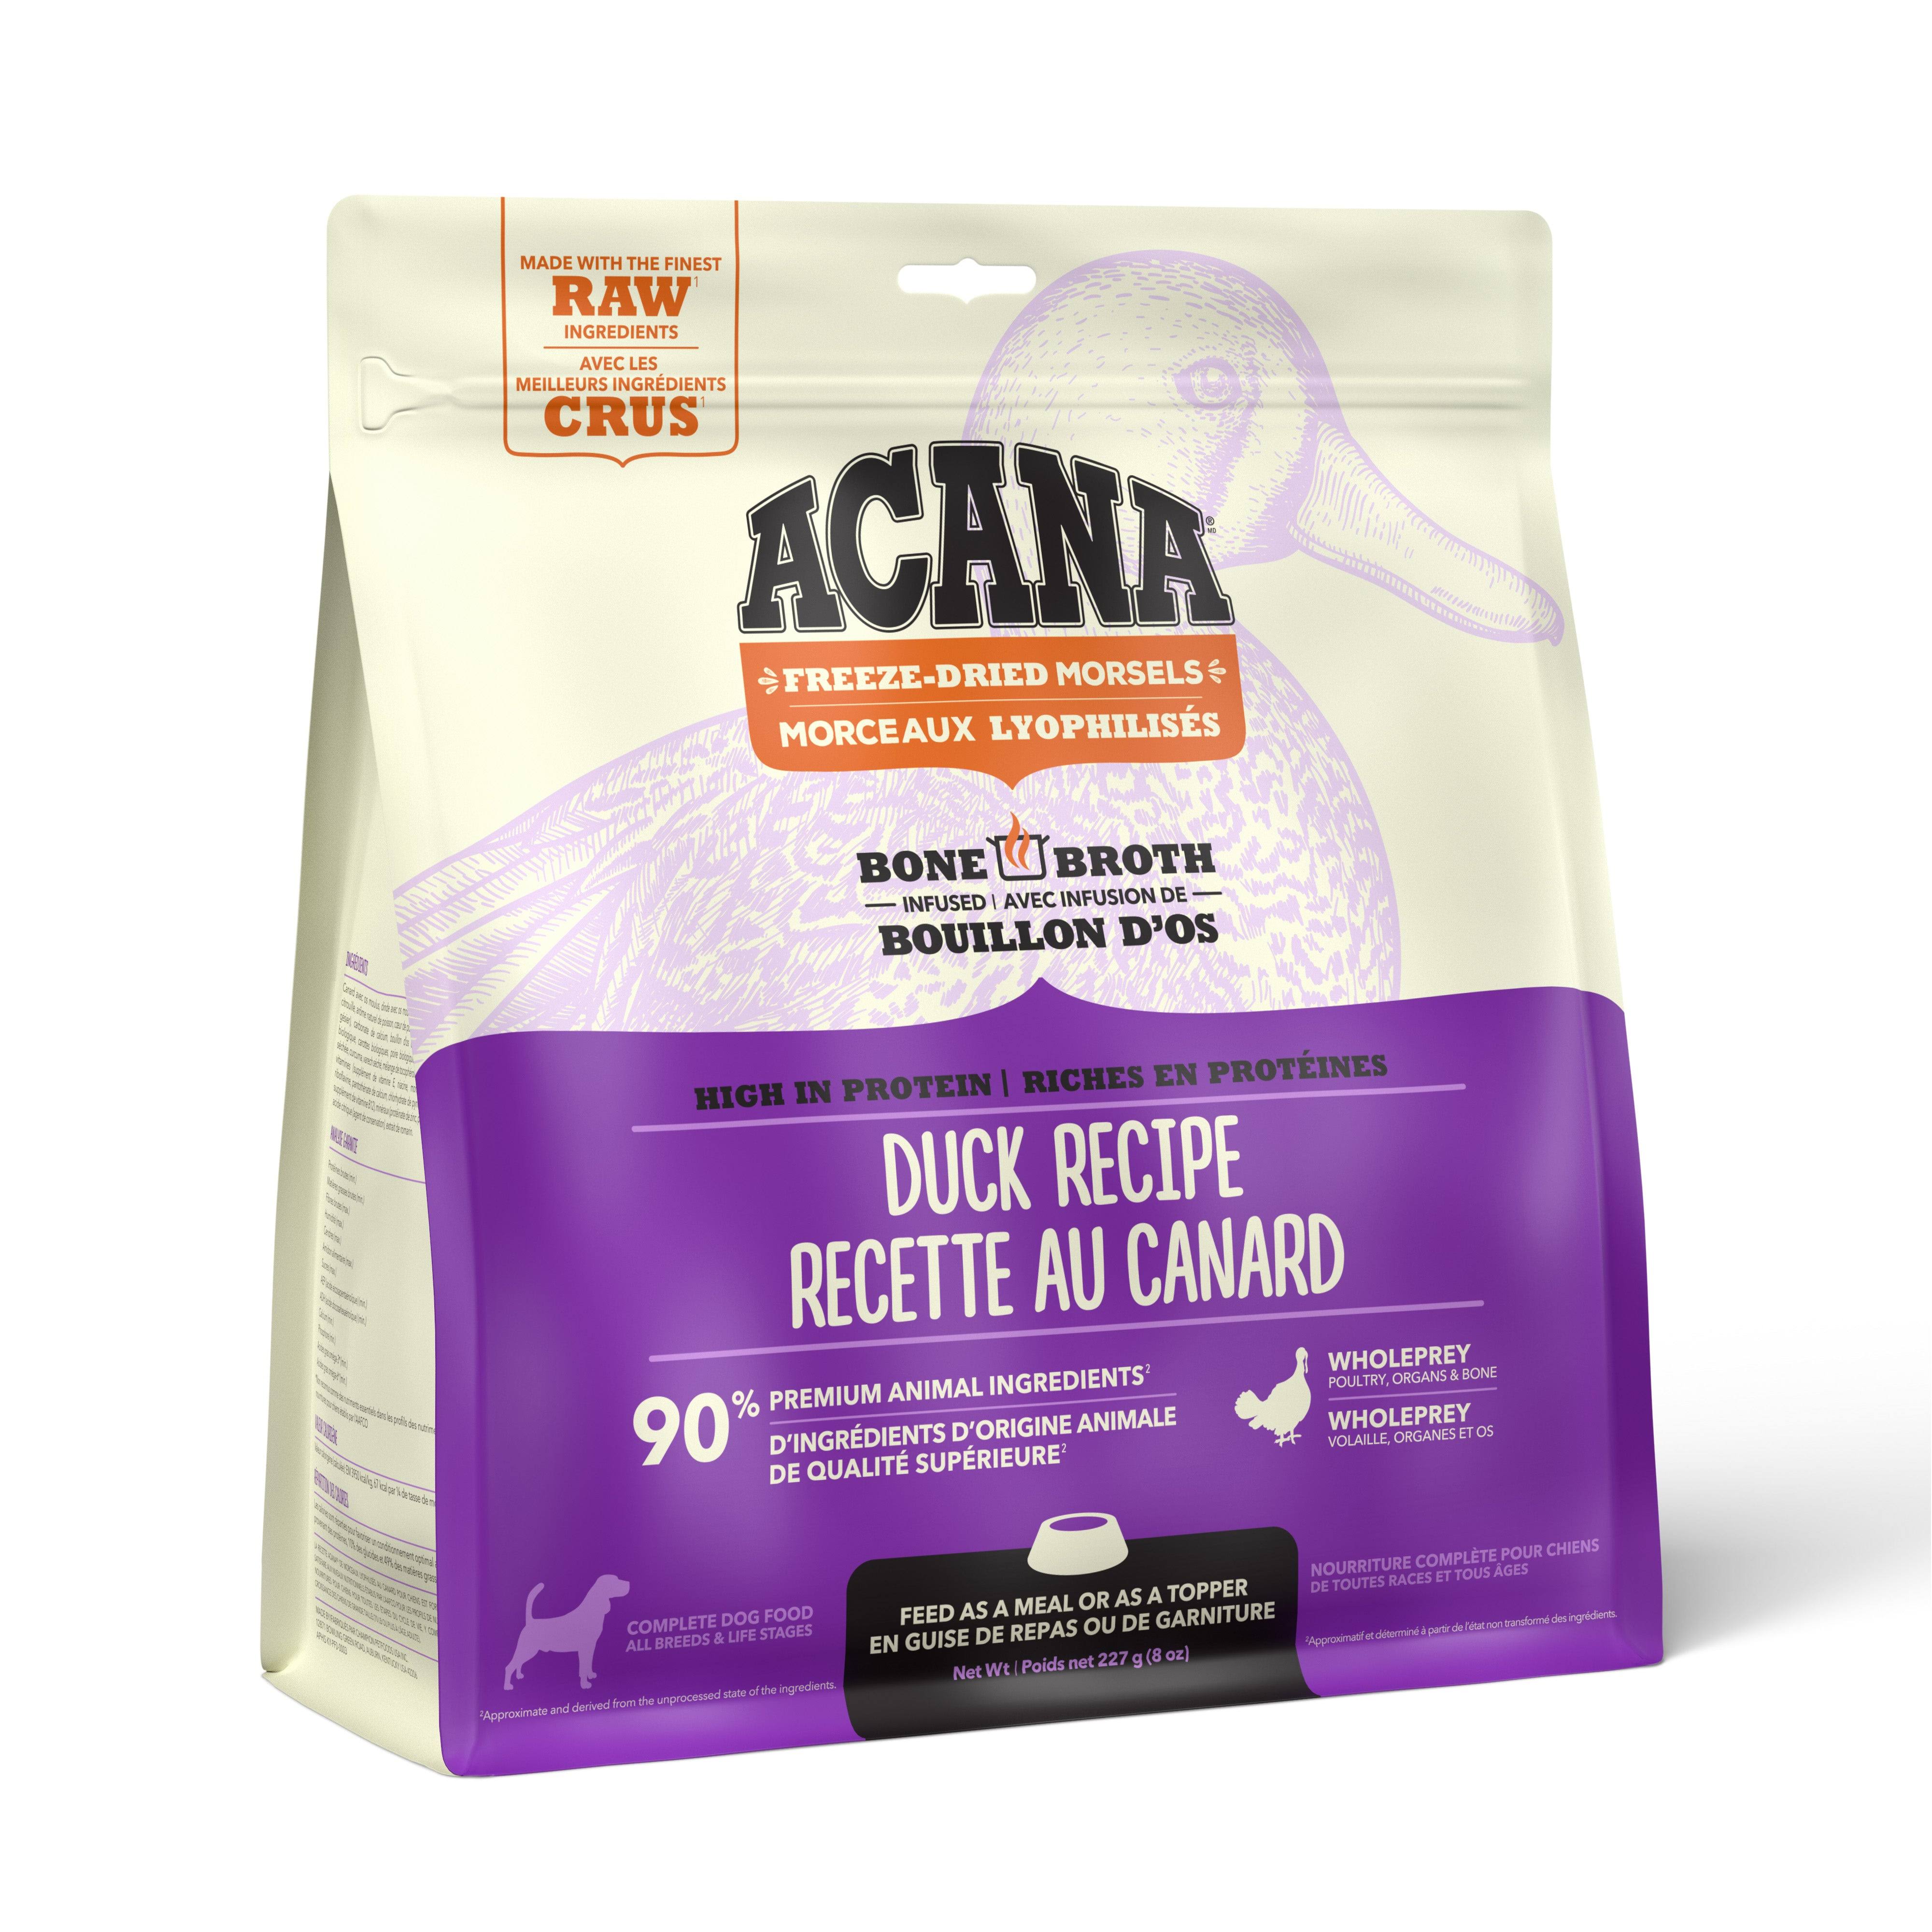 Acana Freeze-Dried Morsels Dog Food - Duck Recipe - 8 oz. Bag